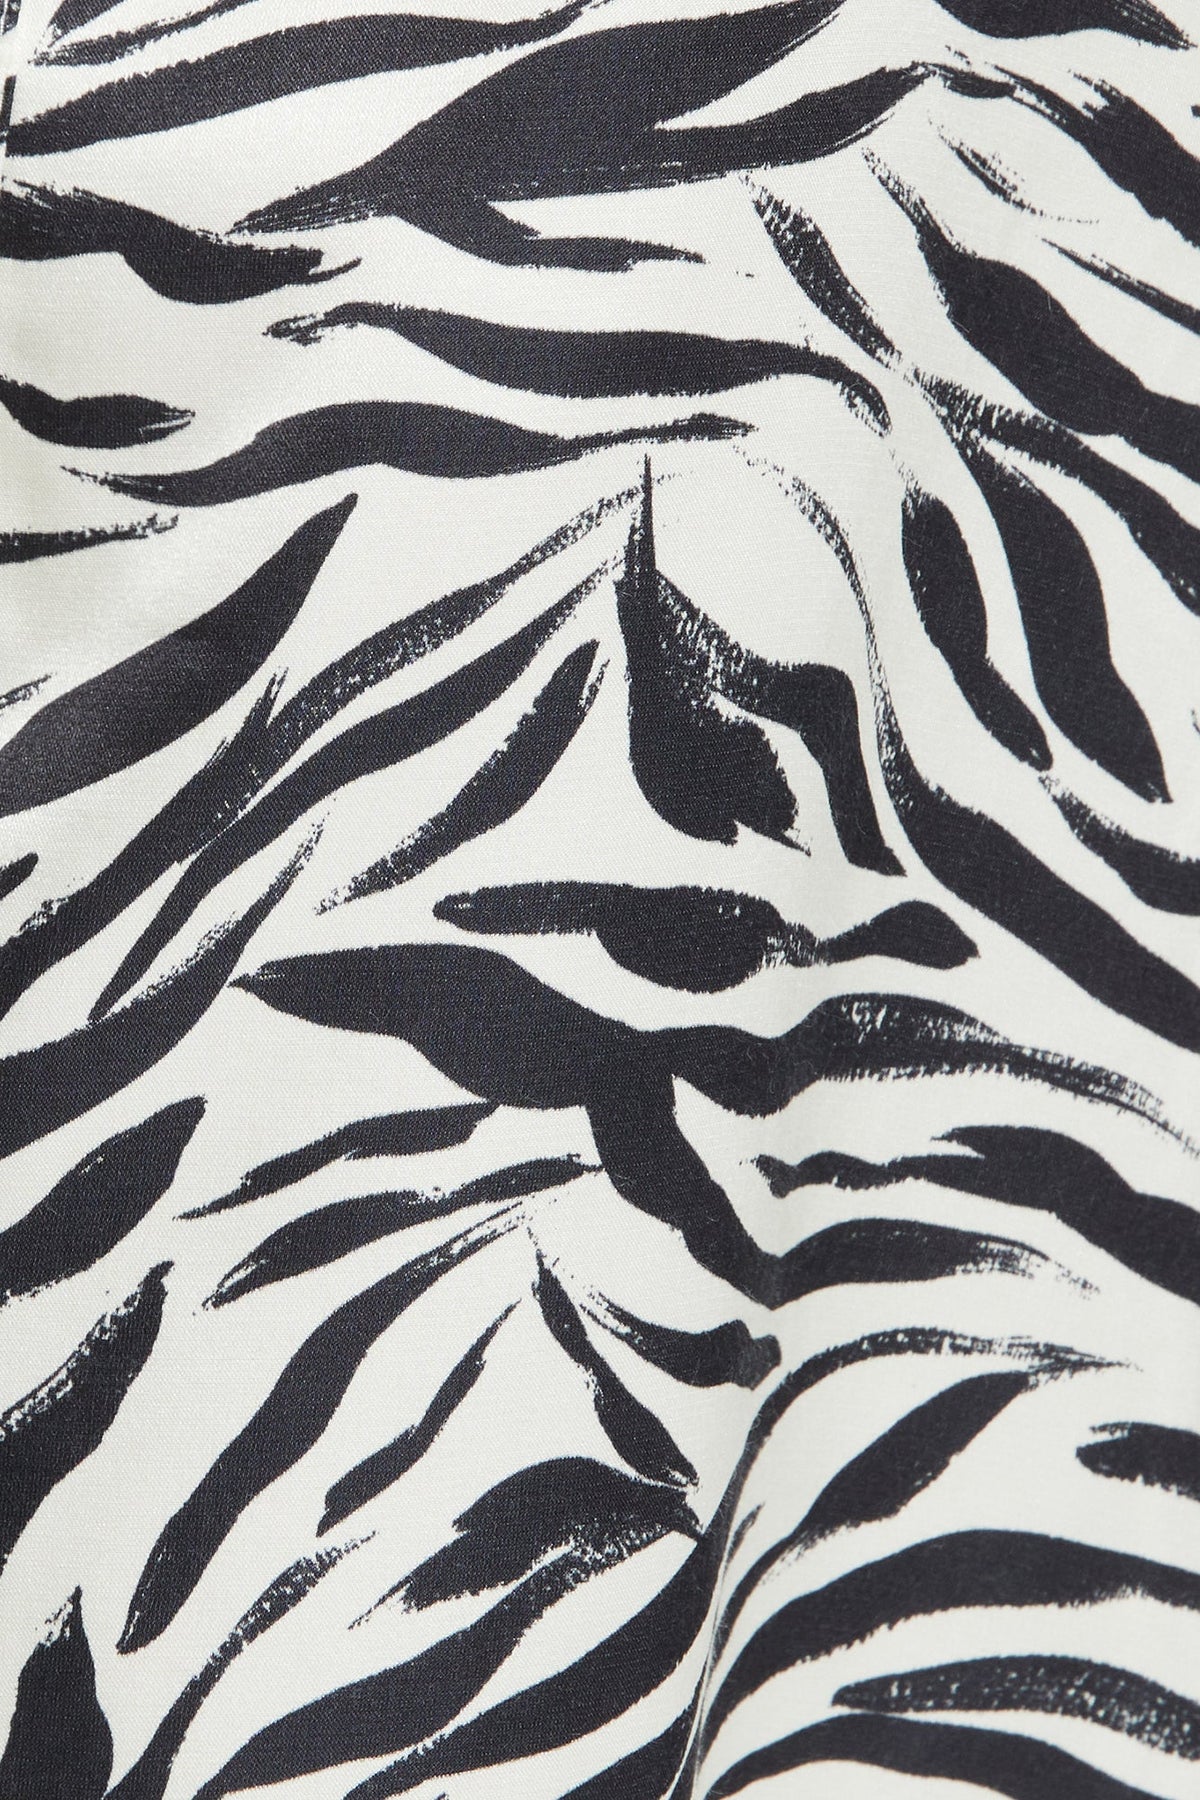 The Zafina Long Pants in Brush Zebra Print by Ginia